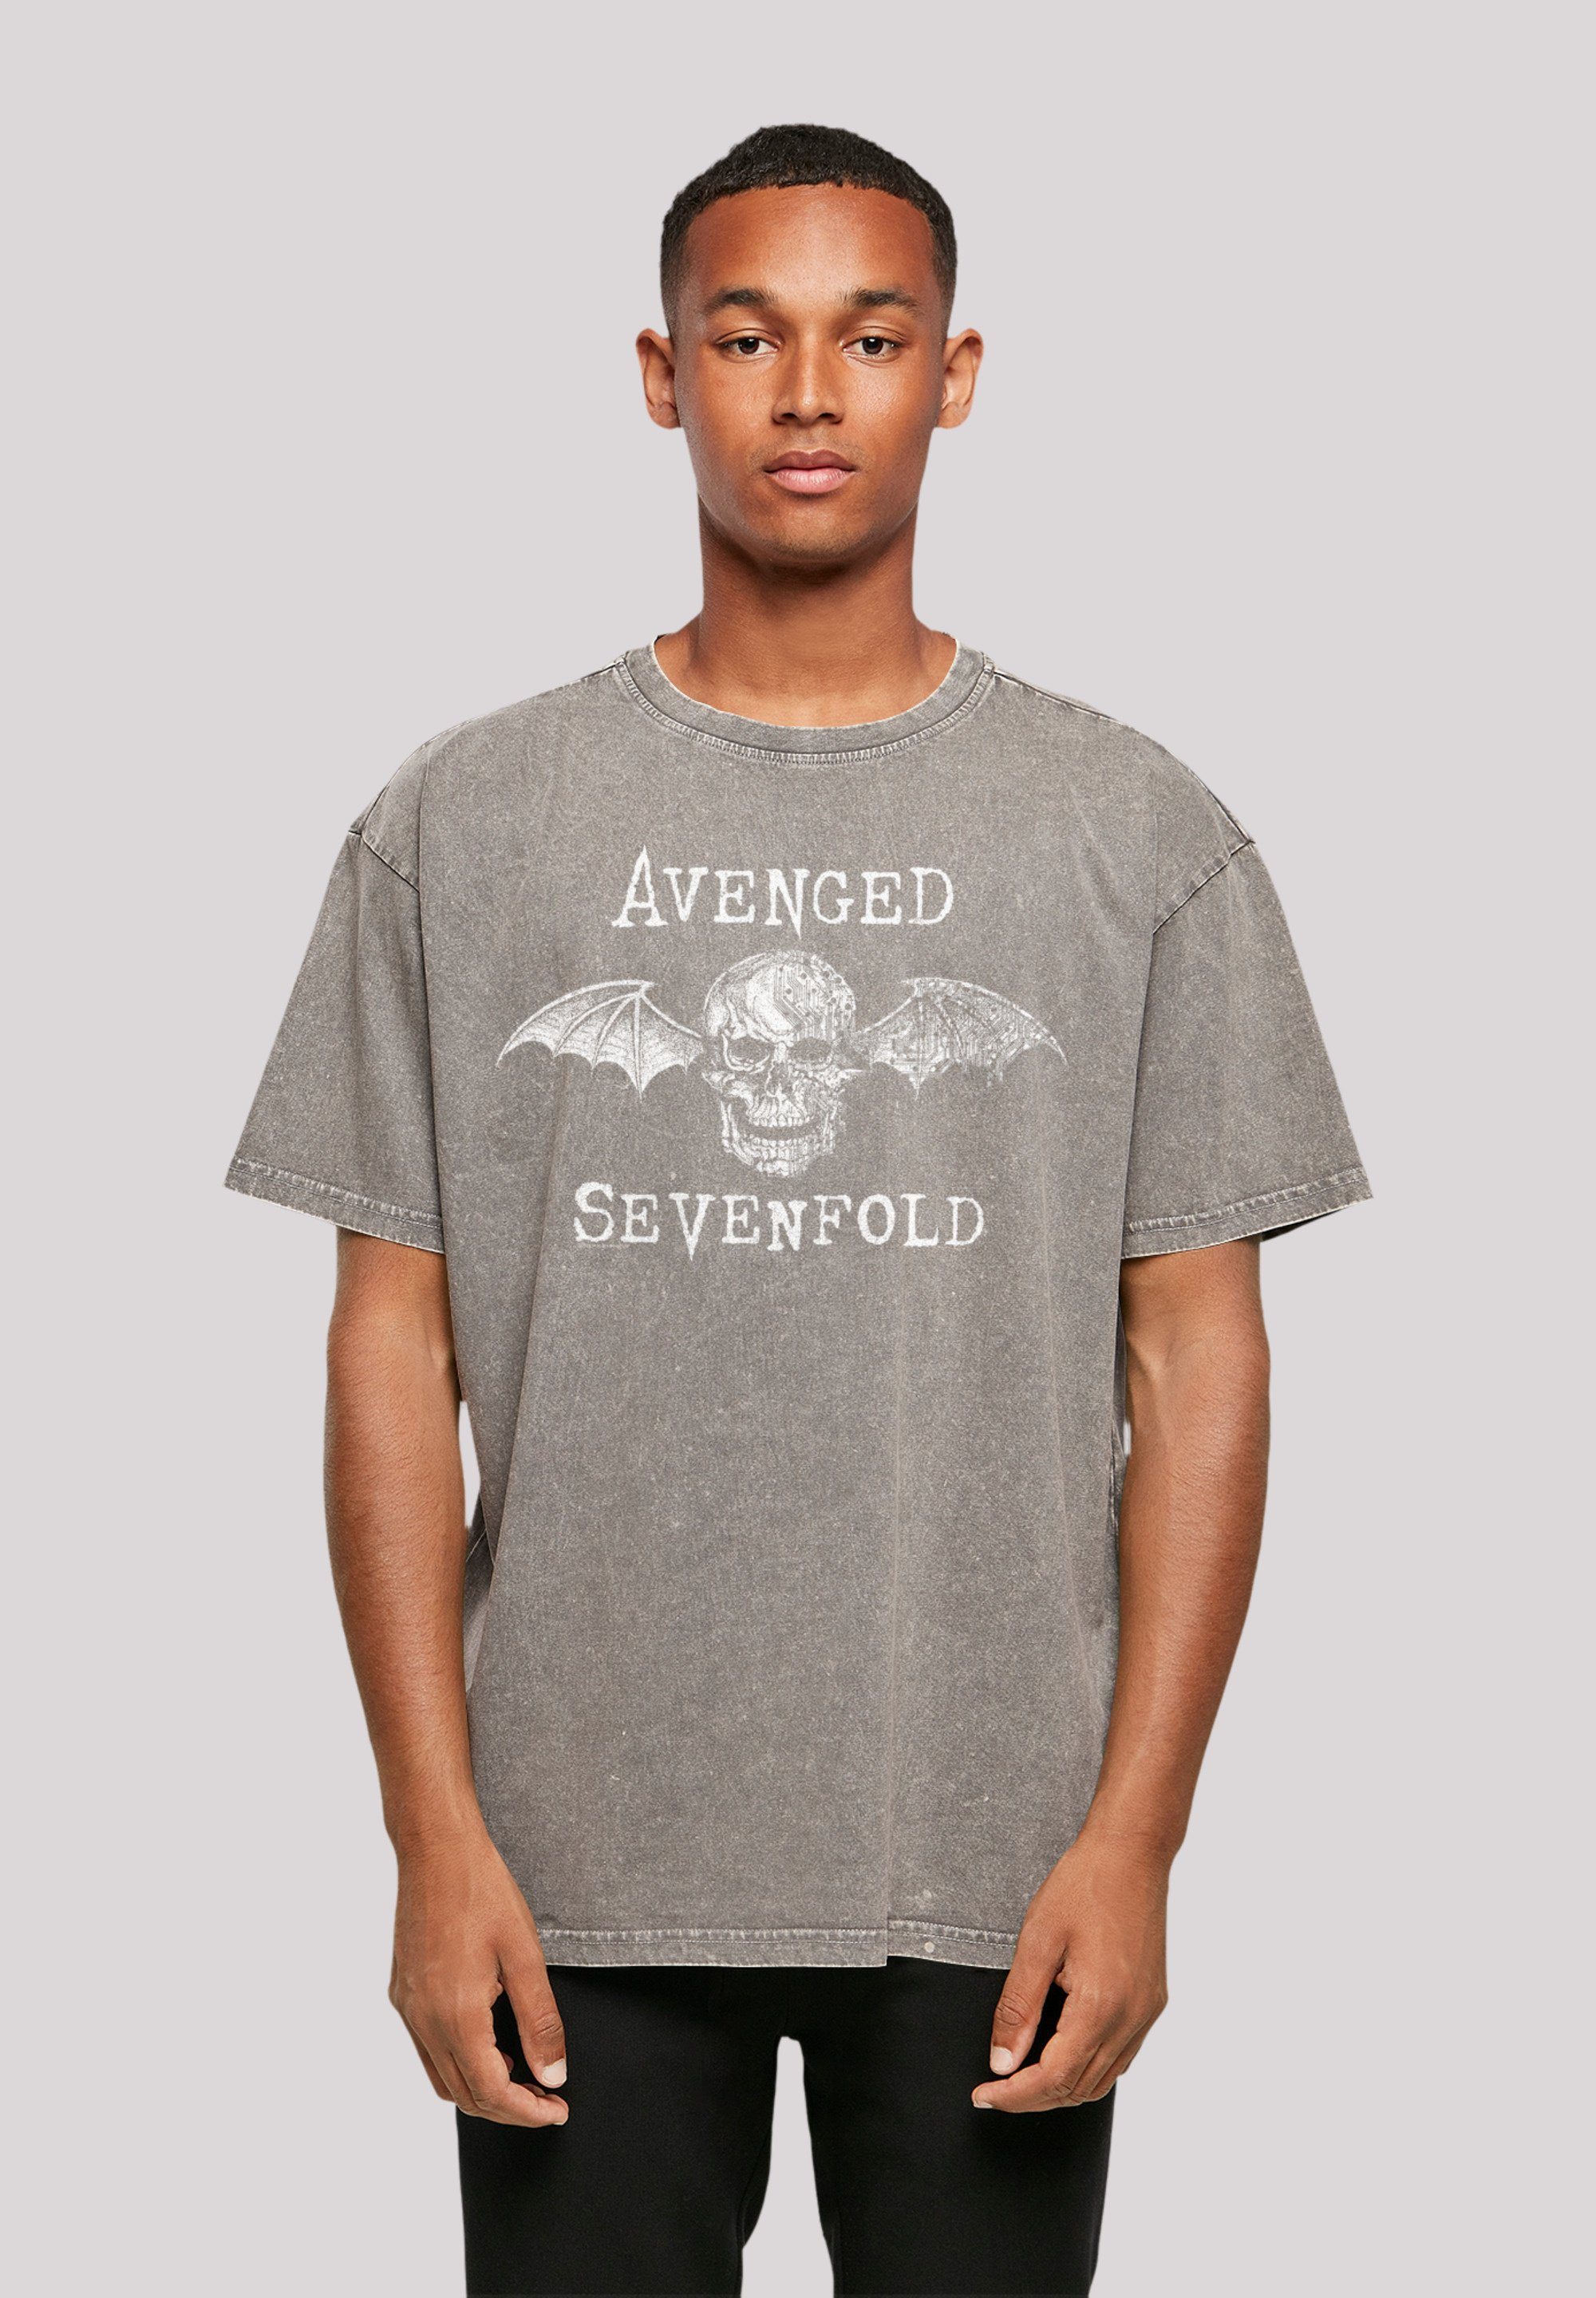 Sevenfold Rock-Musik, Metal Hochwertige Rock Bat T-Shirt Band, Premium Qualität, Cyborg Baumwollqualität Avenged Band F4NT4STIC